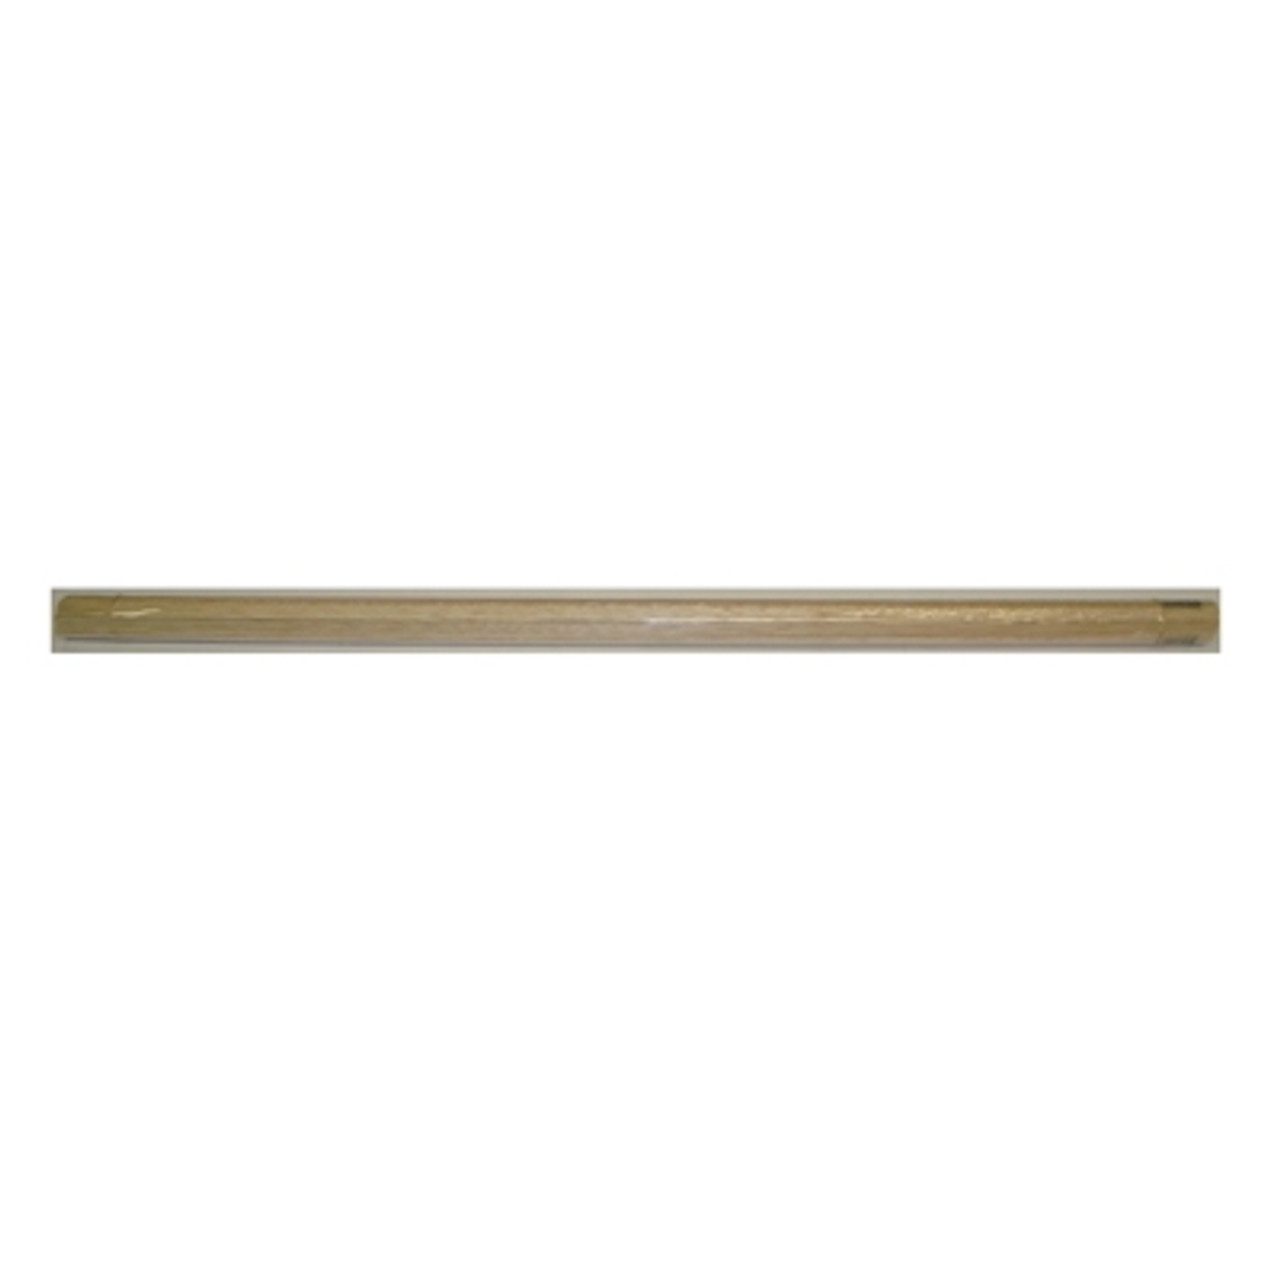 Bud Nosen Balsa Wood Strips, 1/8 x 1/4 x 36, 50/pkg.